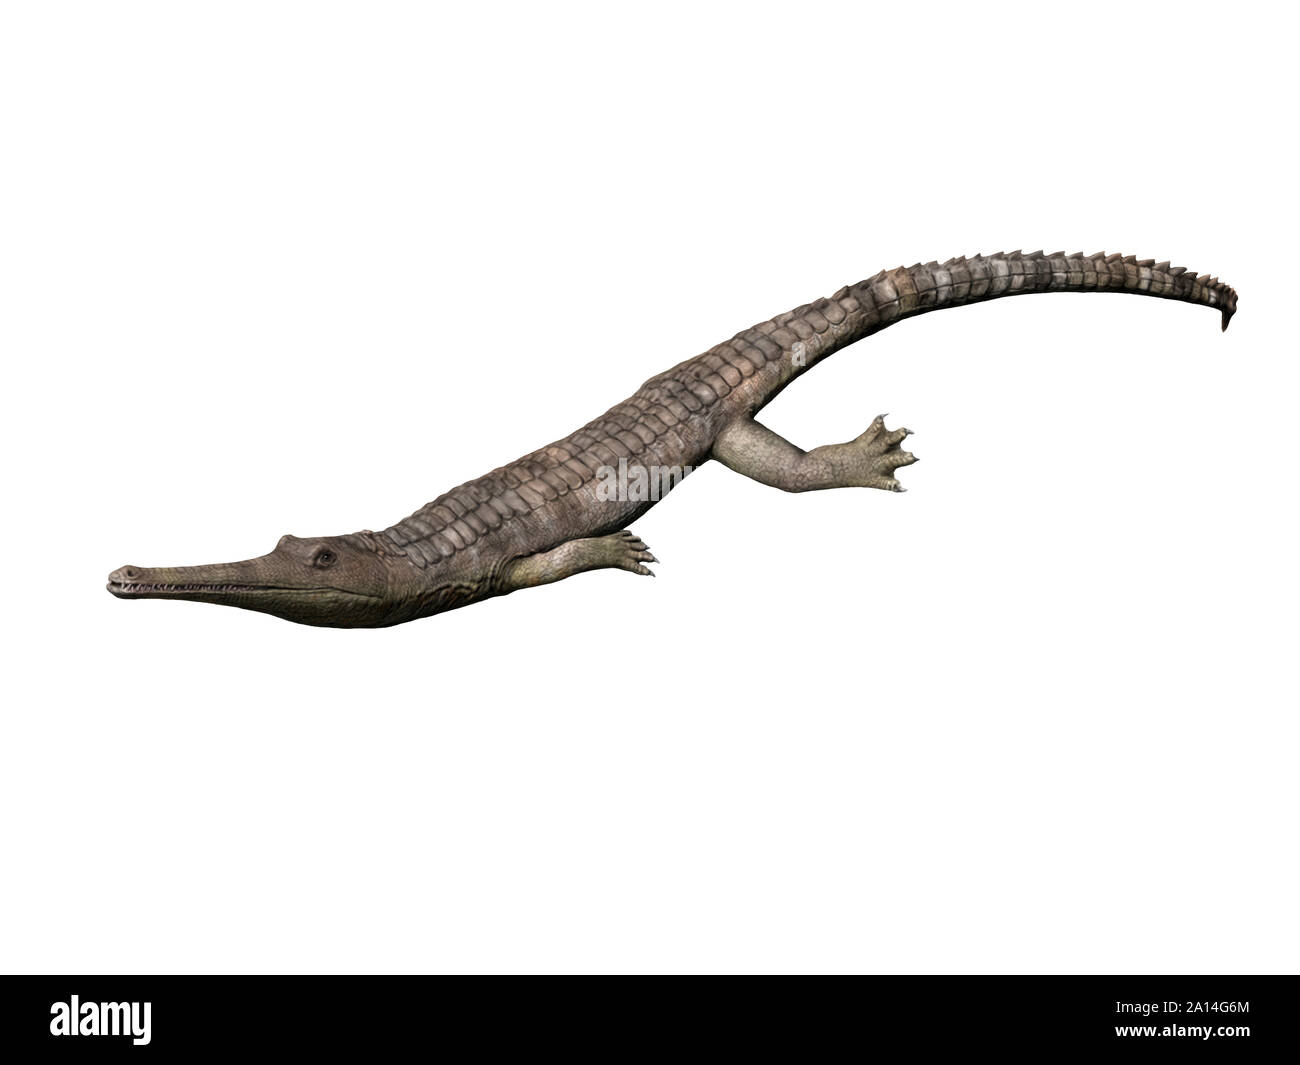 Steneosaurus bollensis, Thalattosuchia, Early Jurassic of Germany. Stock Photo